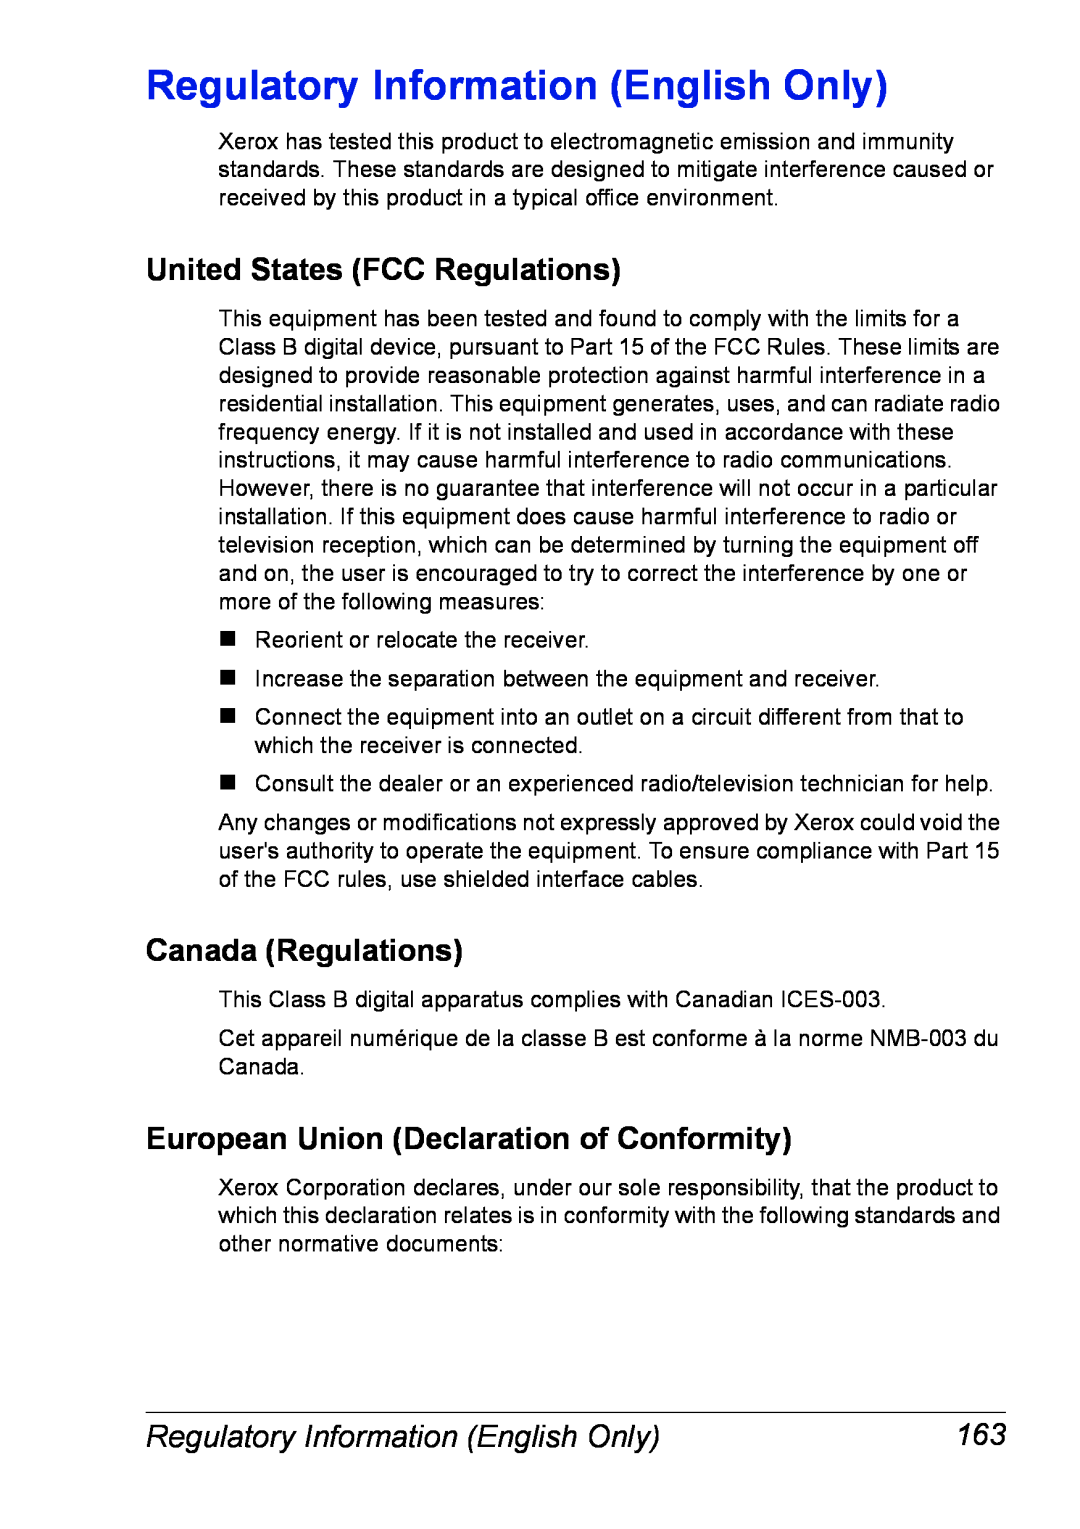 Xerox 6120 manual Regulatory Information English Only, United States FCC Regulations, Canada Regulations 